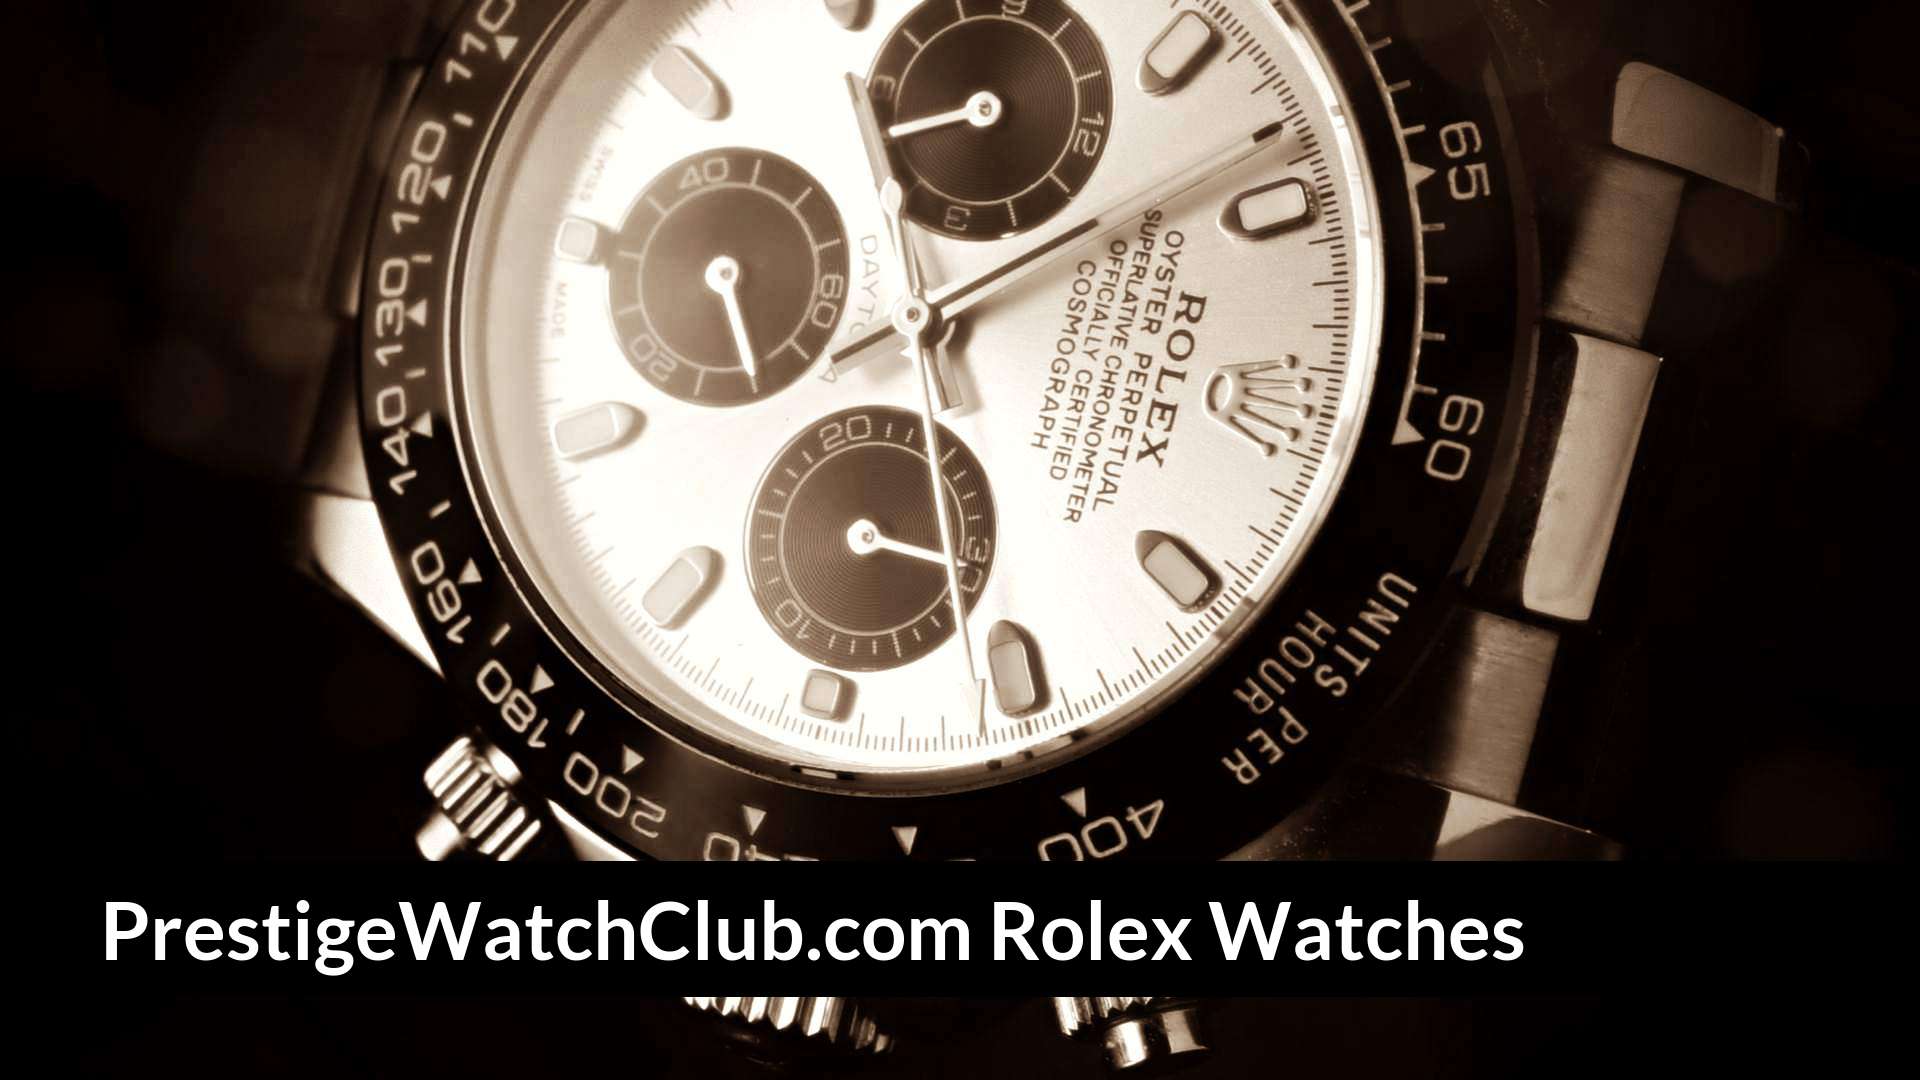 PrestigeWatchClub.com Rolex Watches